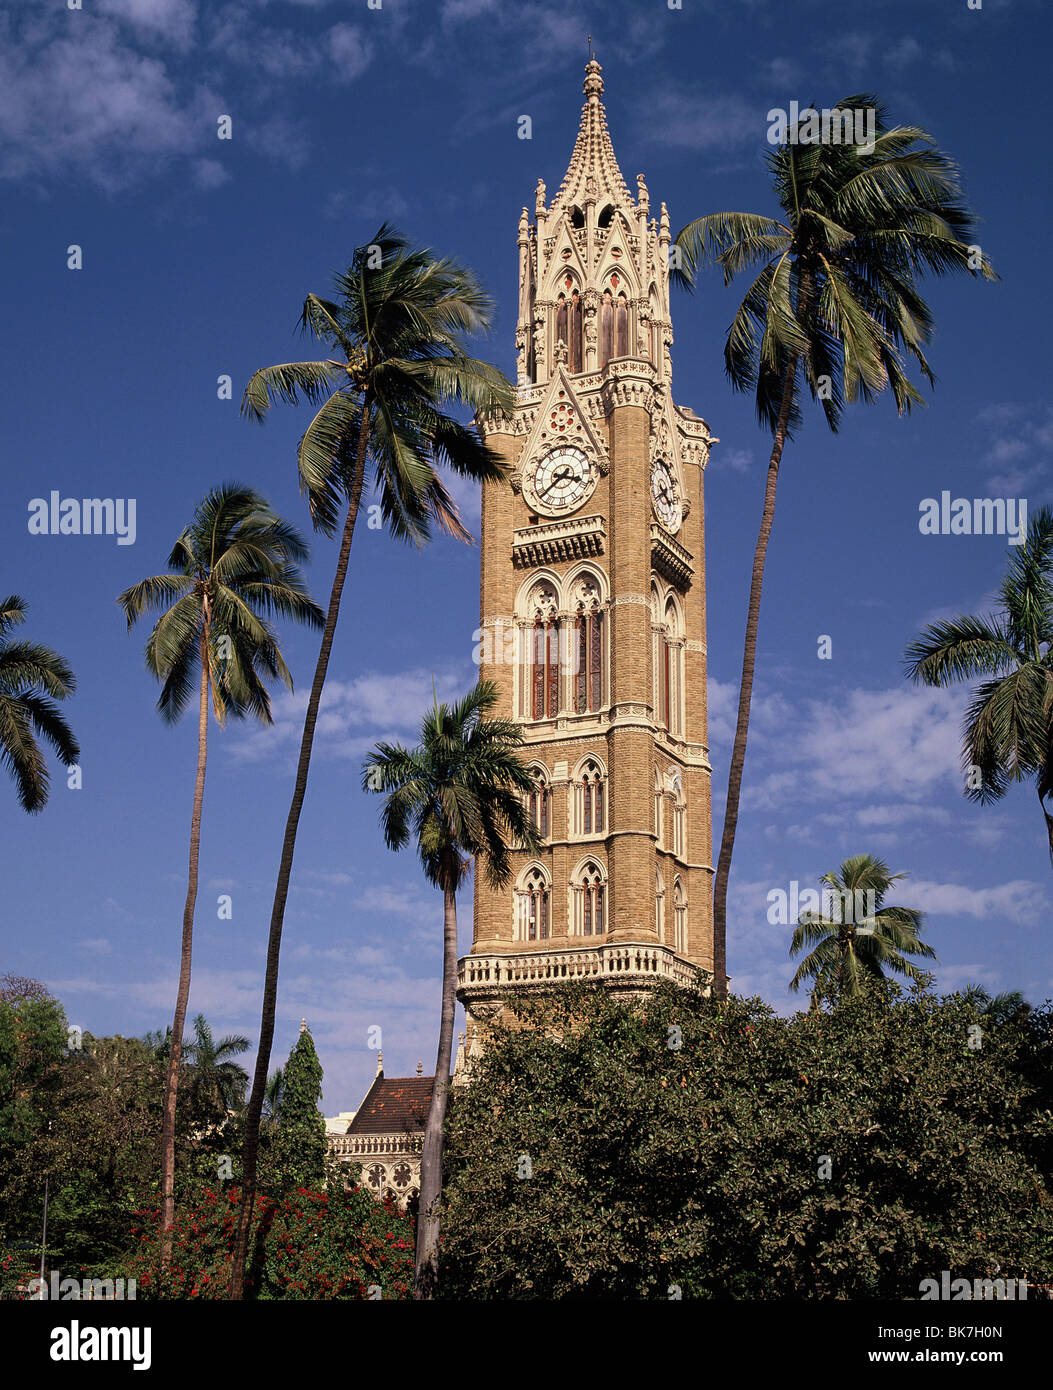 University clocktower, Mumbai, India, Asia Stock Photo